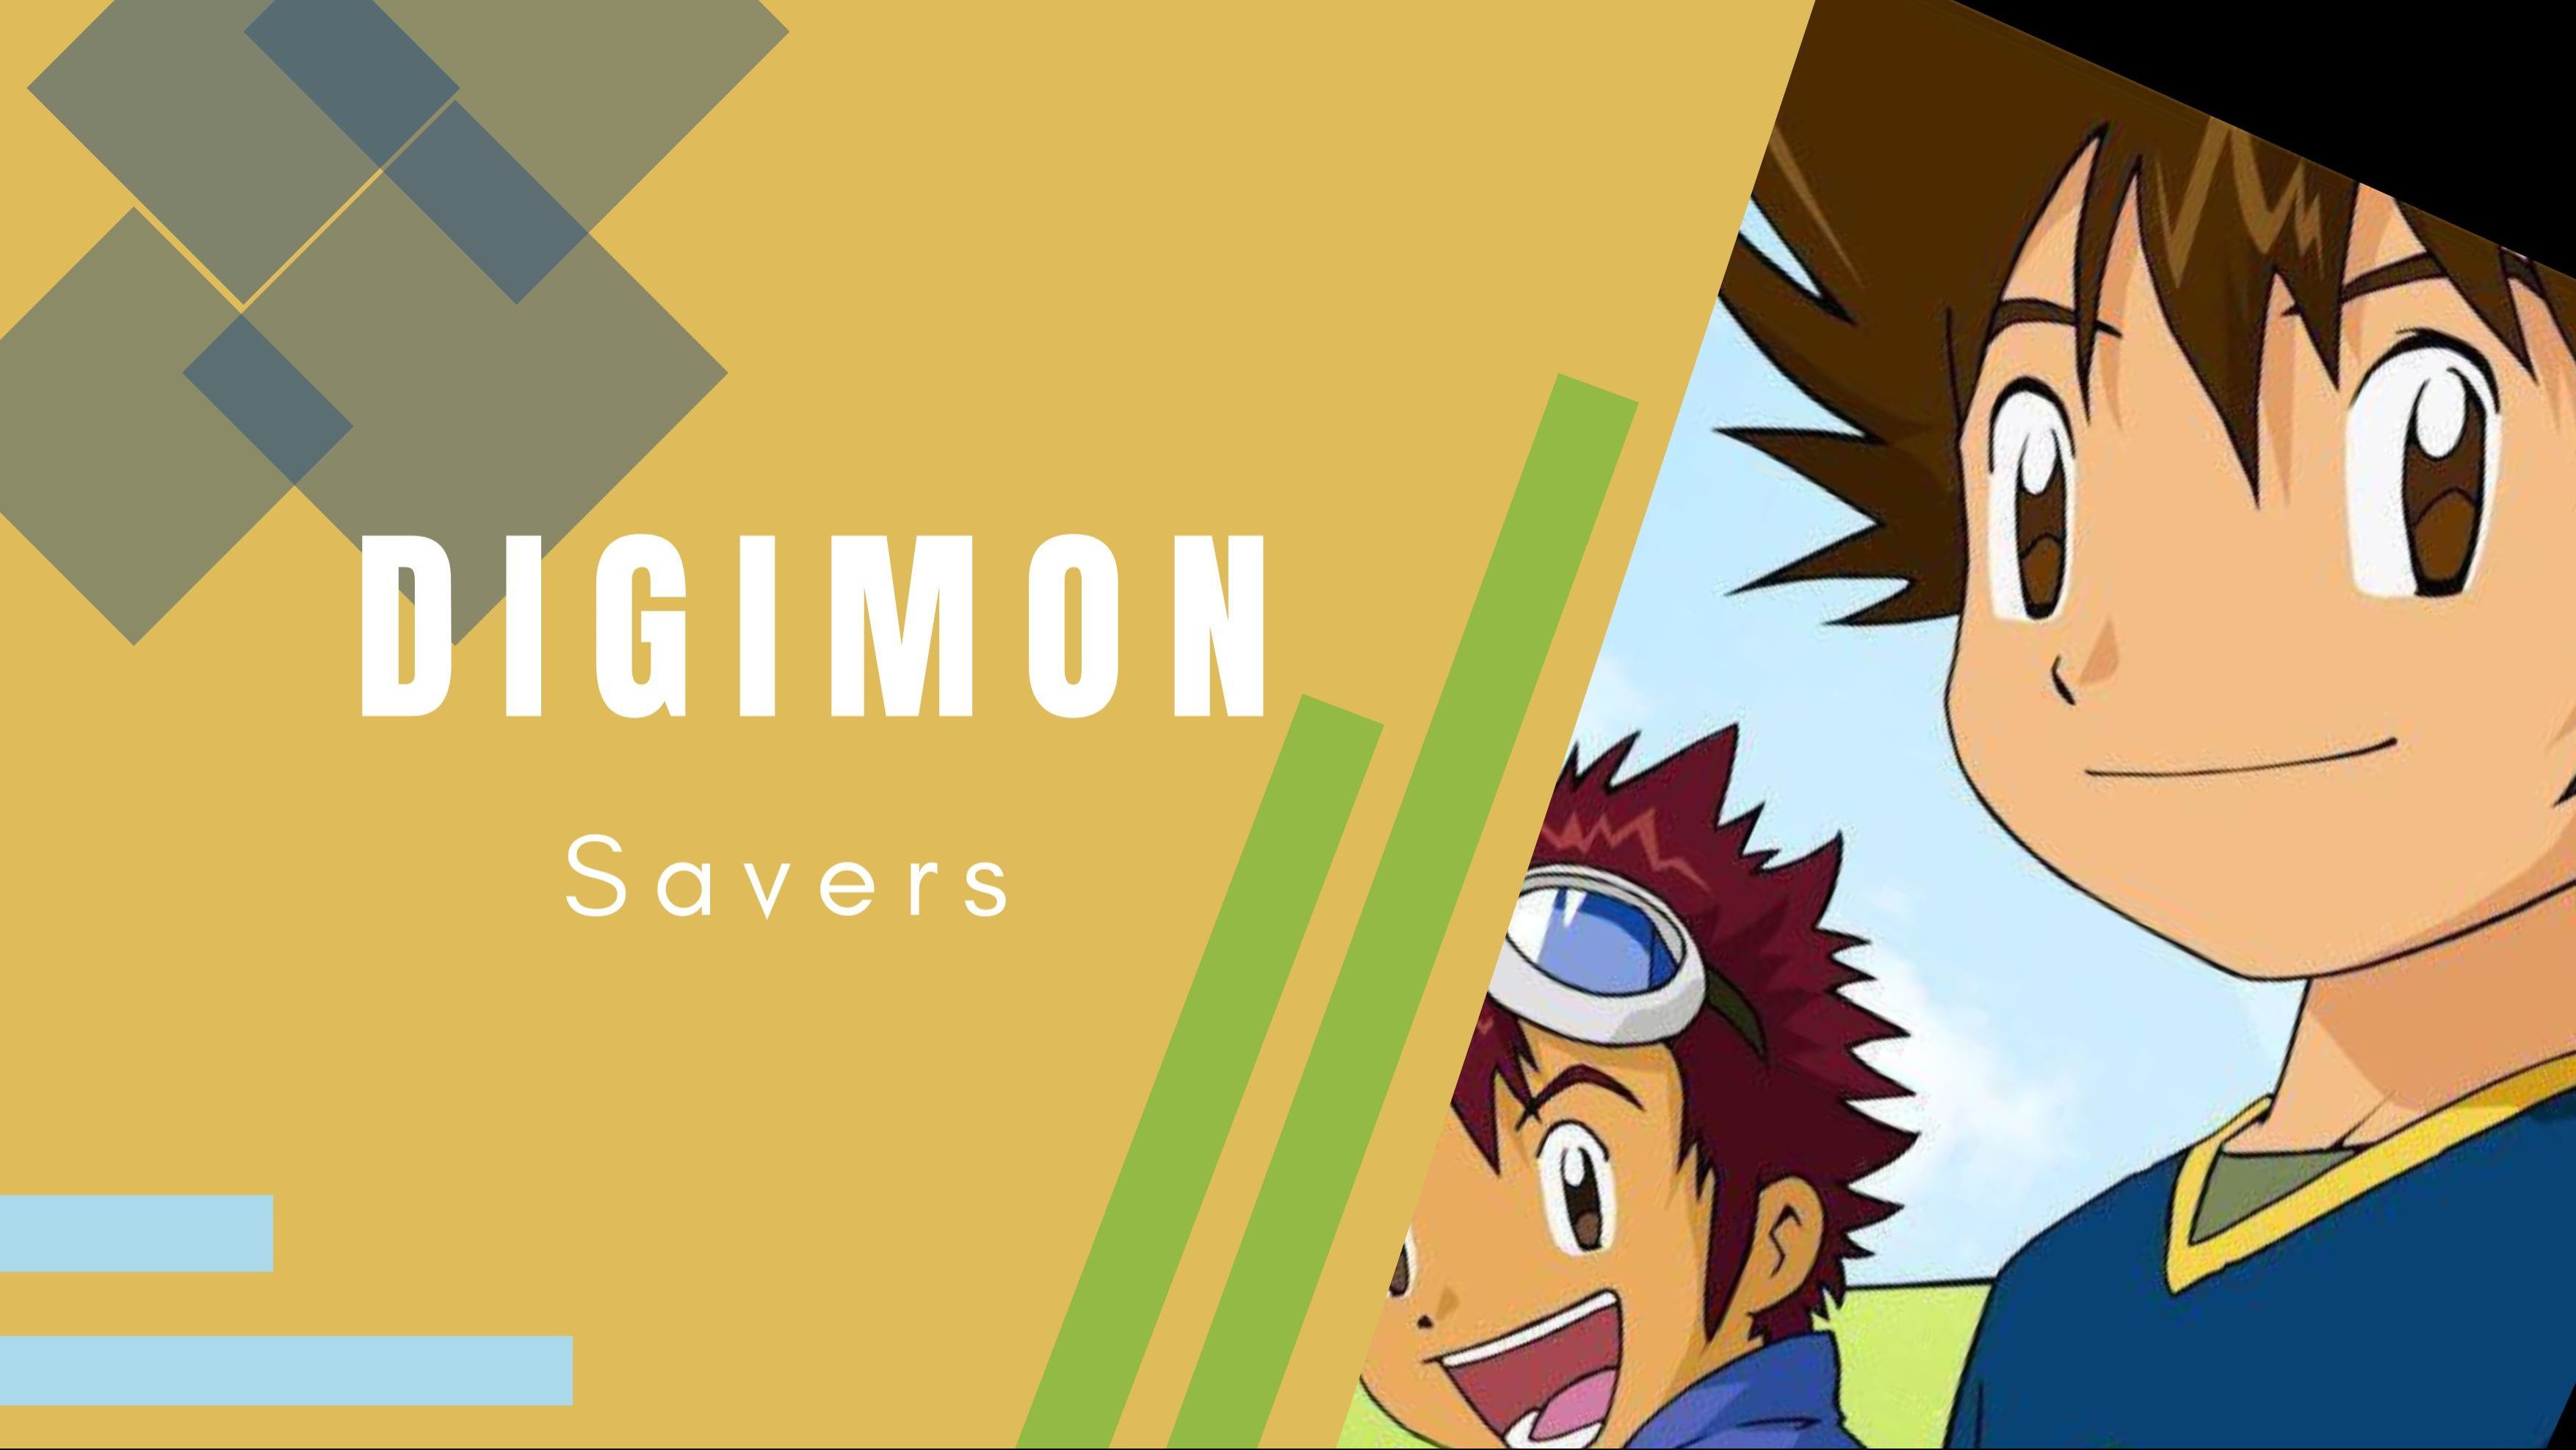 10 Urutan Nonton Anime Digimon Berdasarkan Tahun Rilis